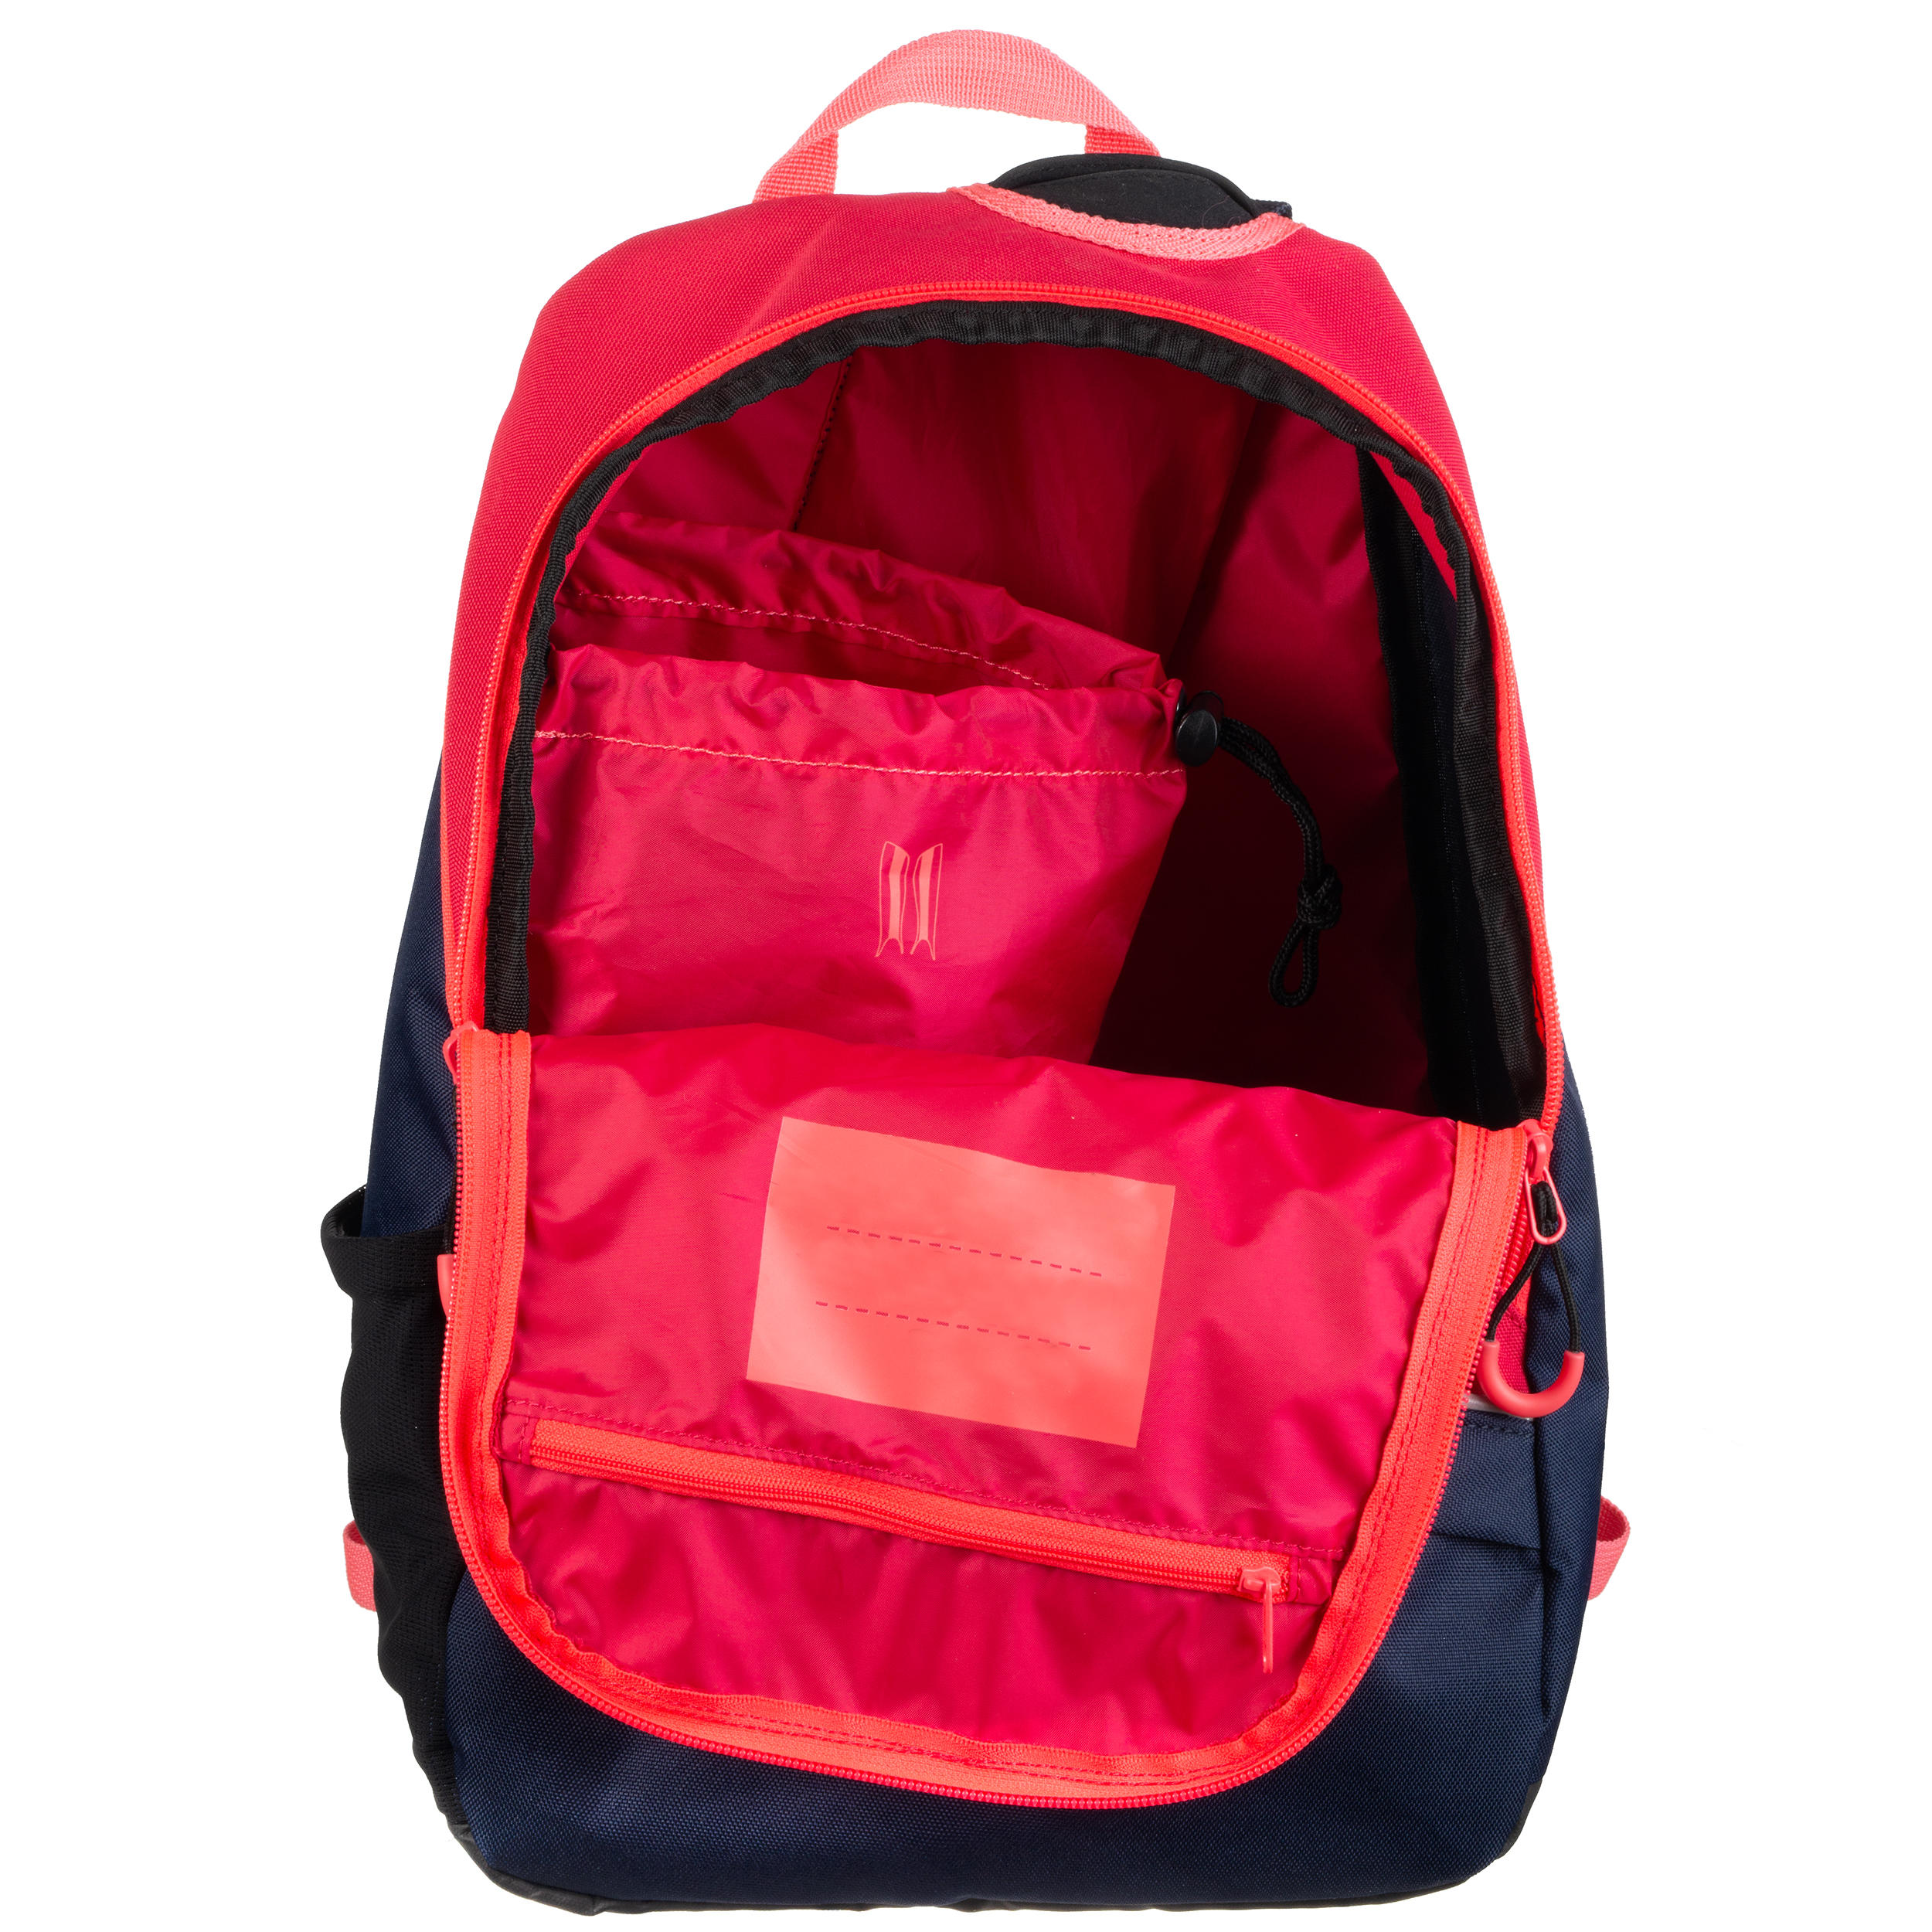 FH100 Kids' Field Hockey Backpack - Blue/Pink 4/10